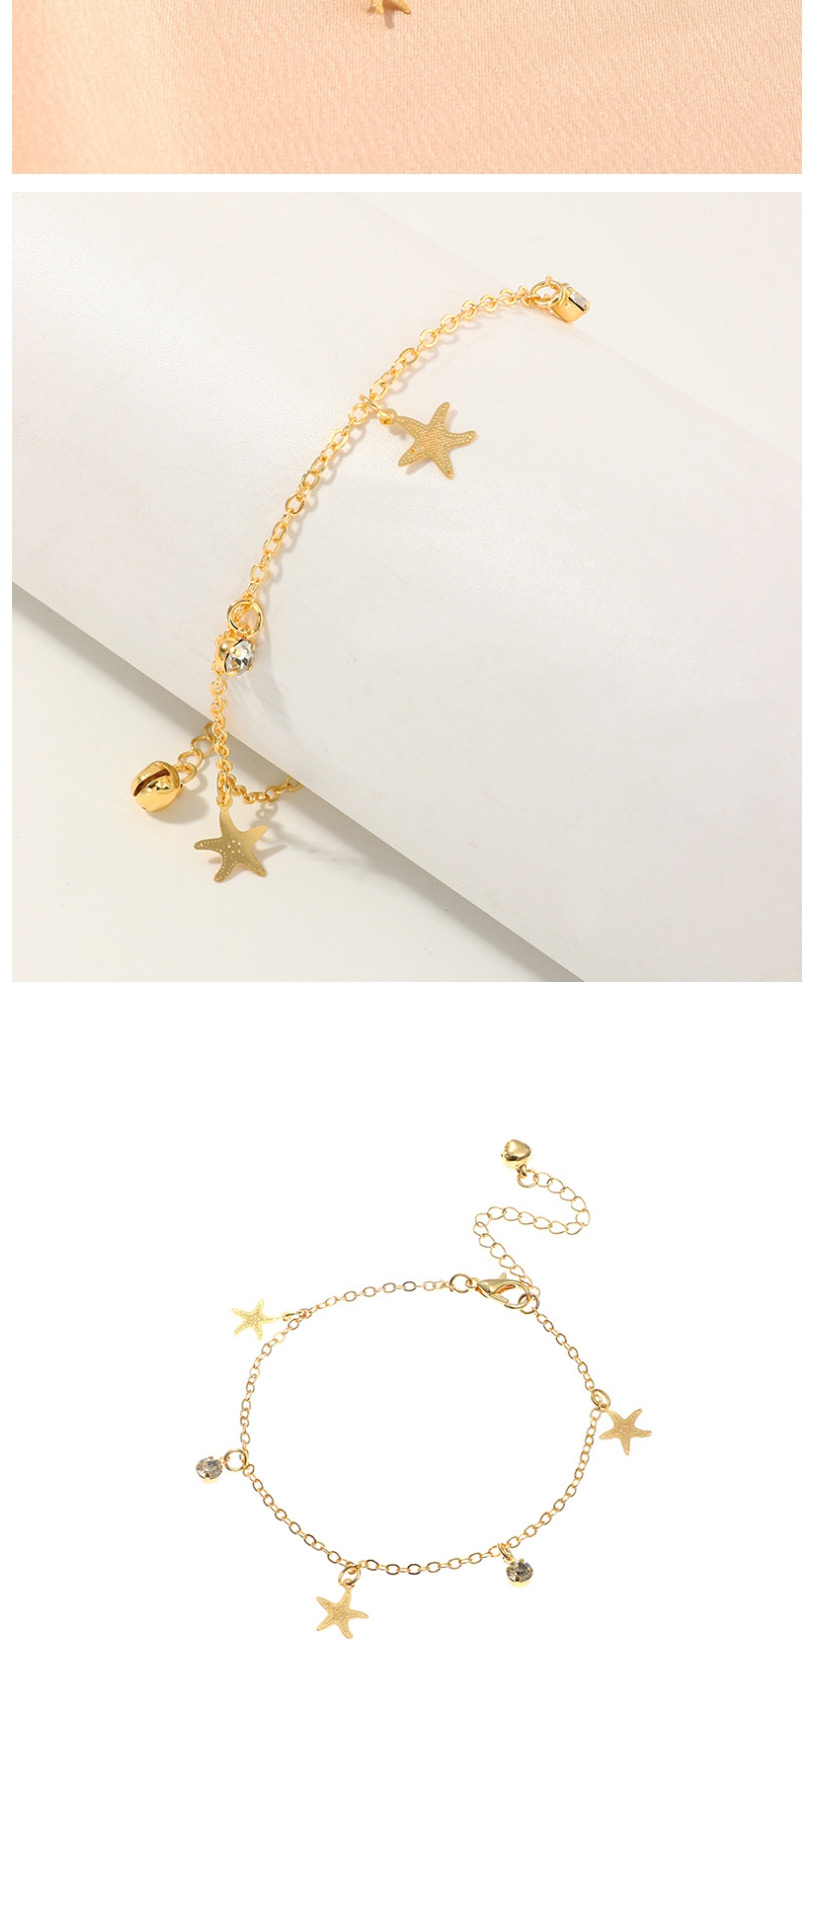 Fashion gold color butterfly shape decorated bracelet,Fashion Anklets